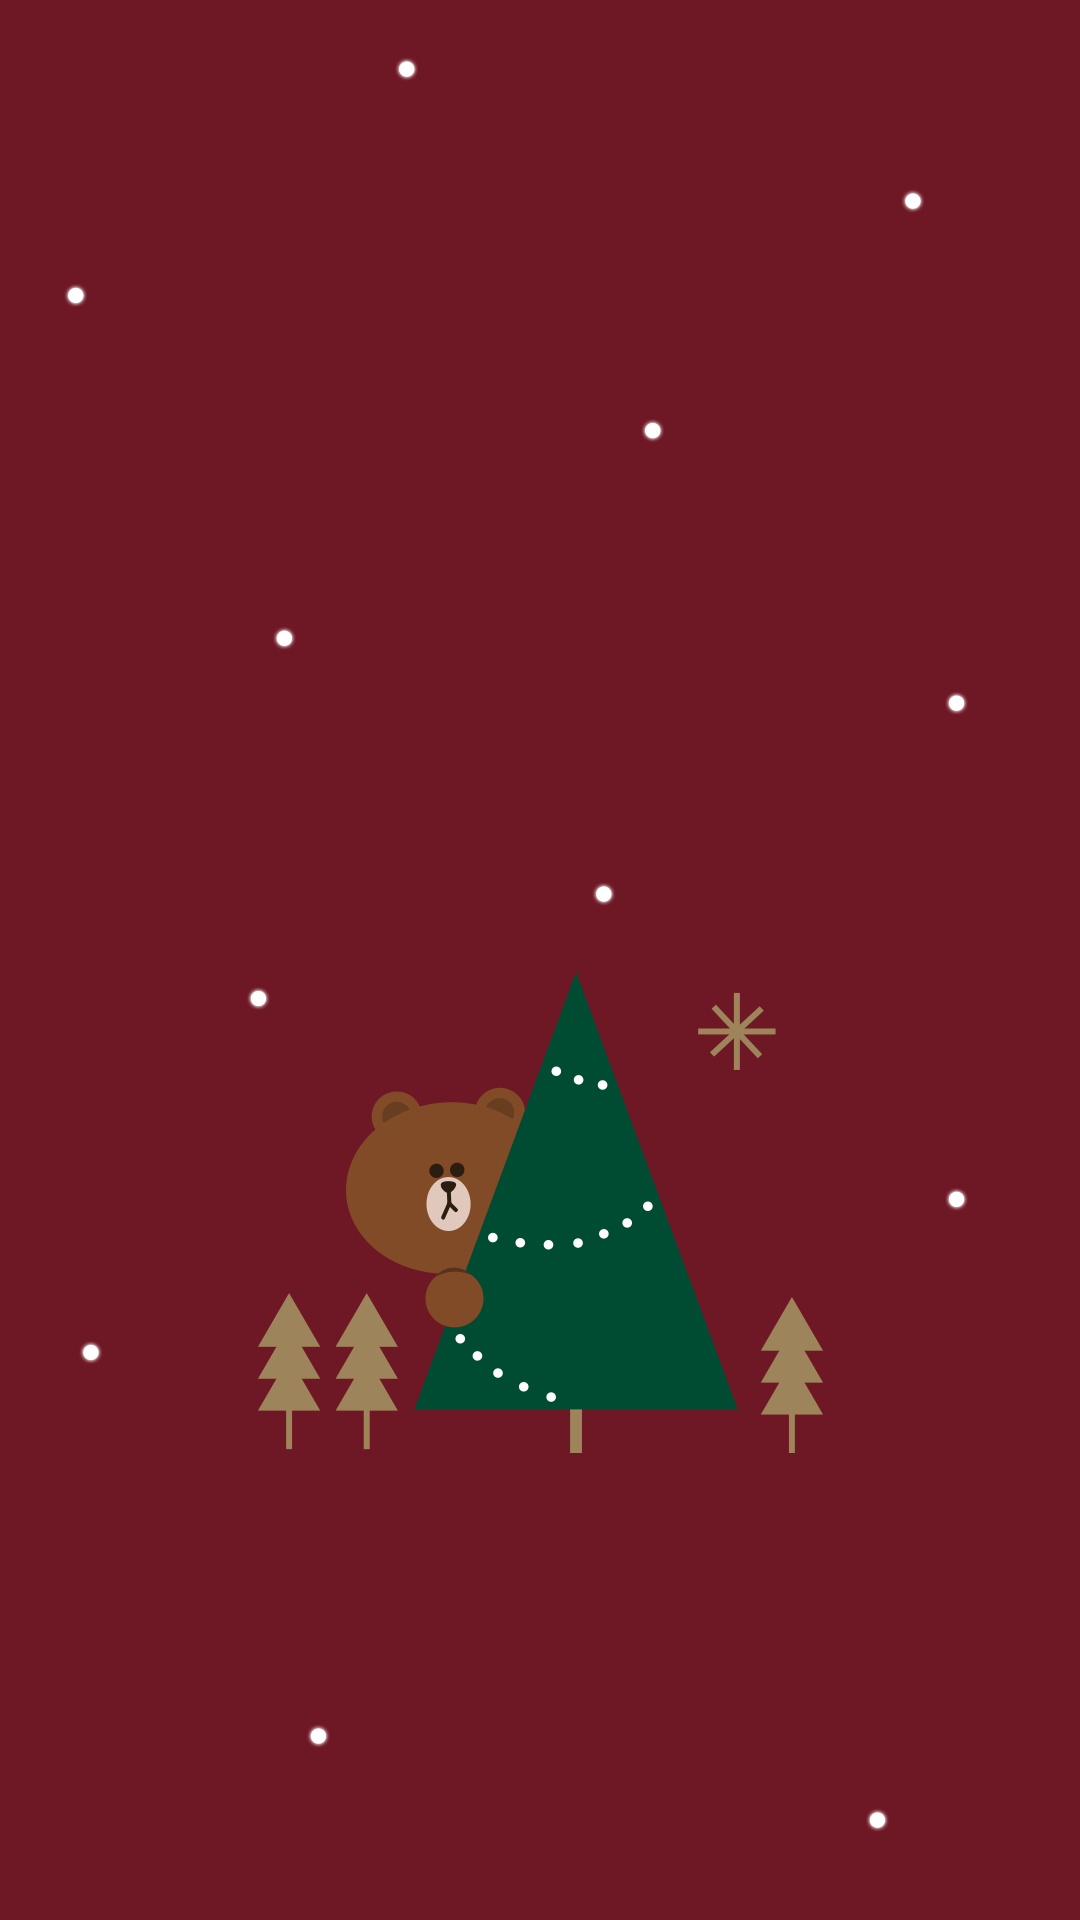 Line Deco公式アカウント Lineフレンズのクリスマス コレクション出ましたよ ブラウン コニー サリーのクリスマス 壁紙可愛いよね ブラウンの可愛い画像 Http T Co Vhykl5qulm